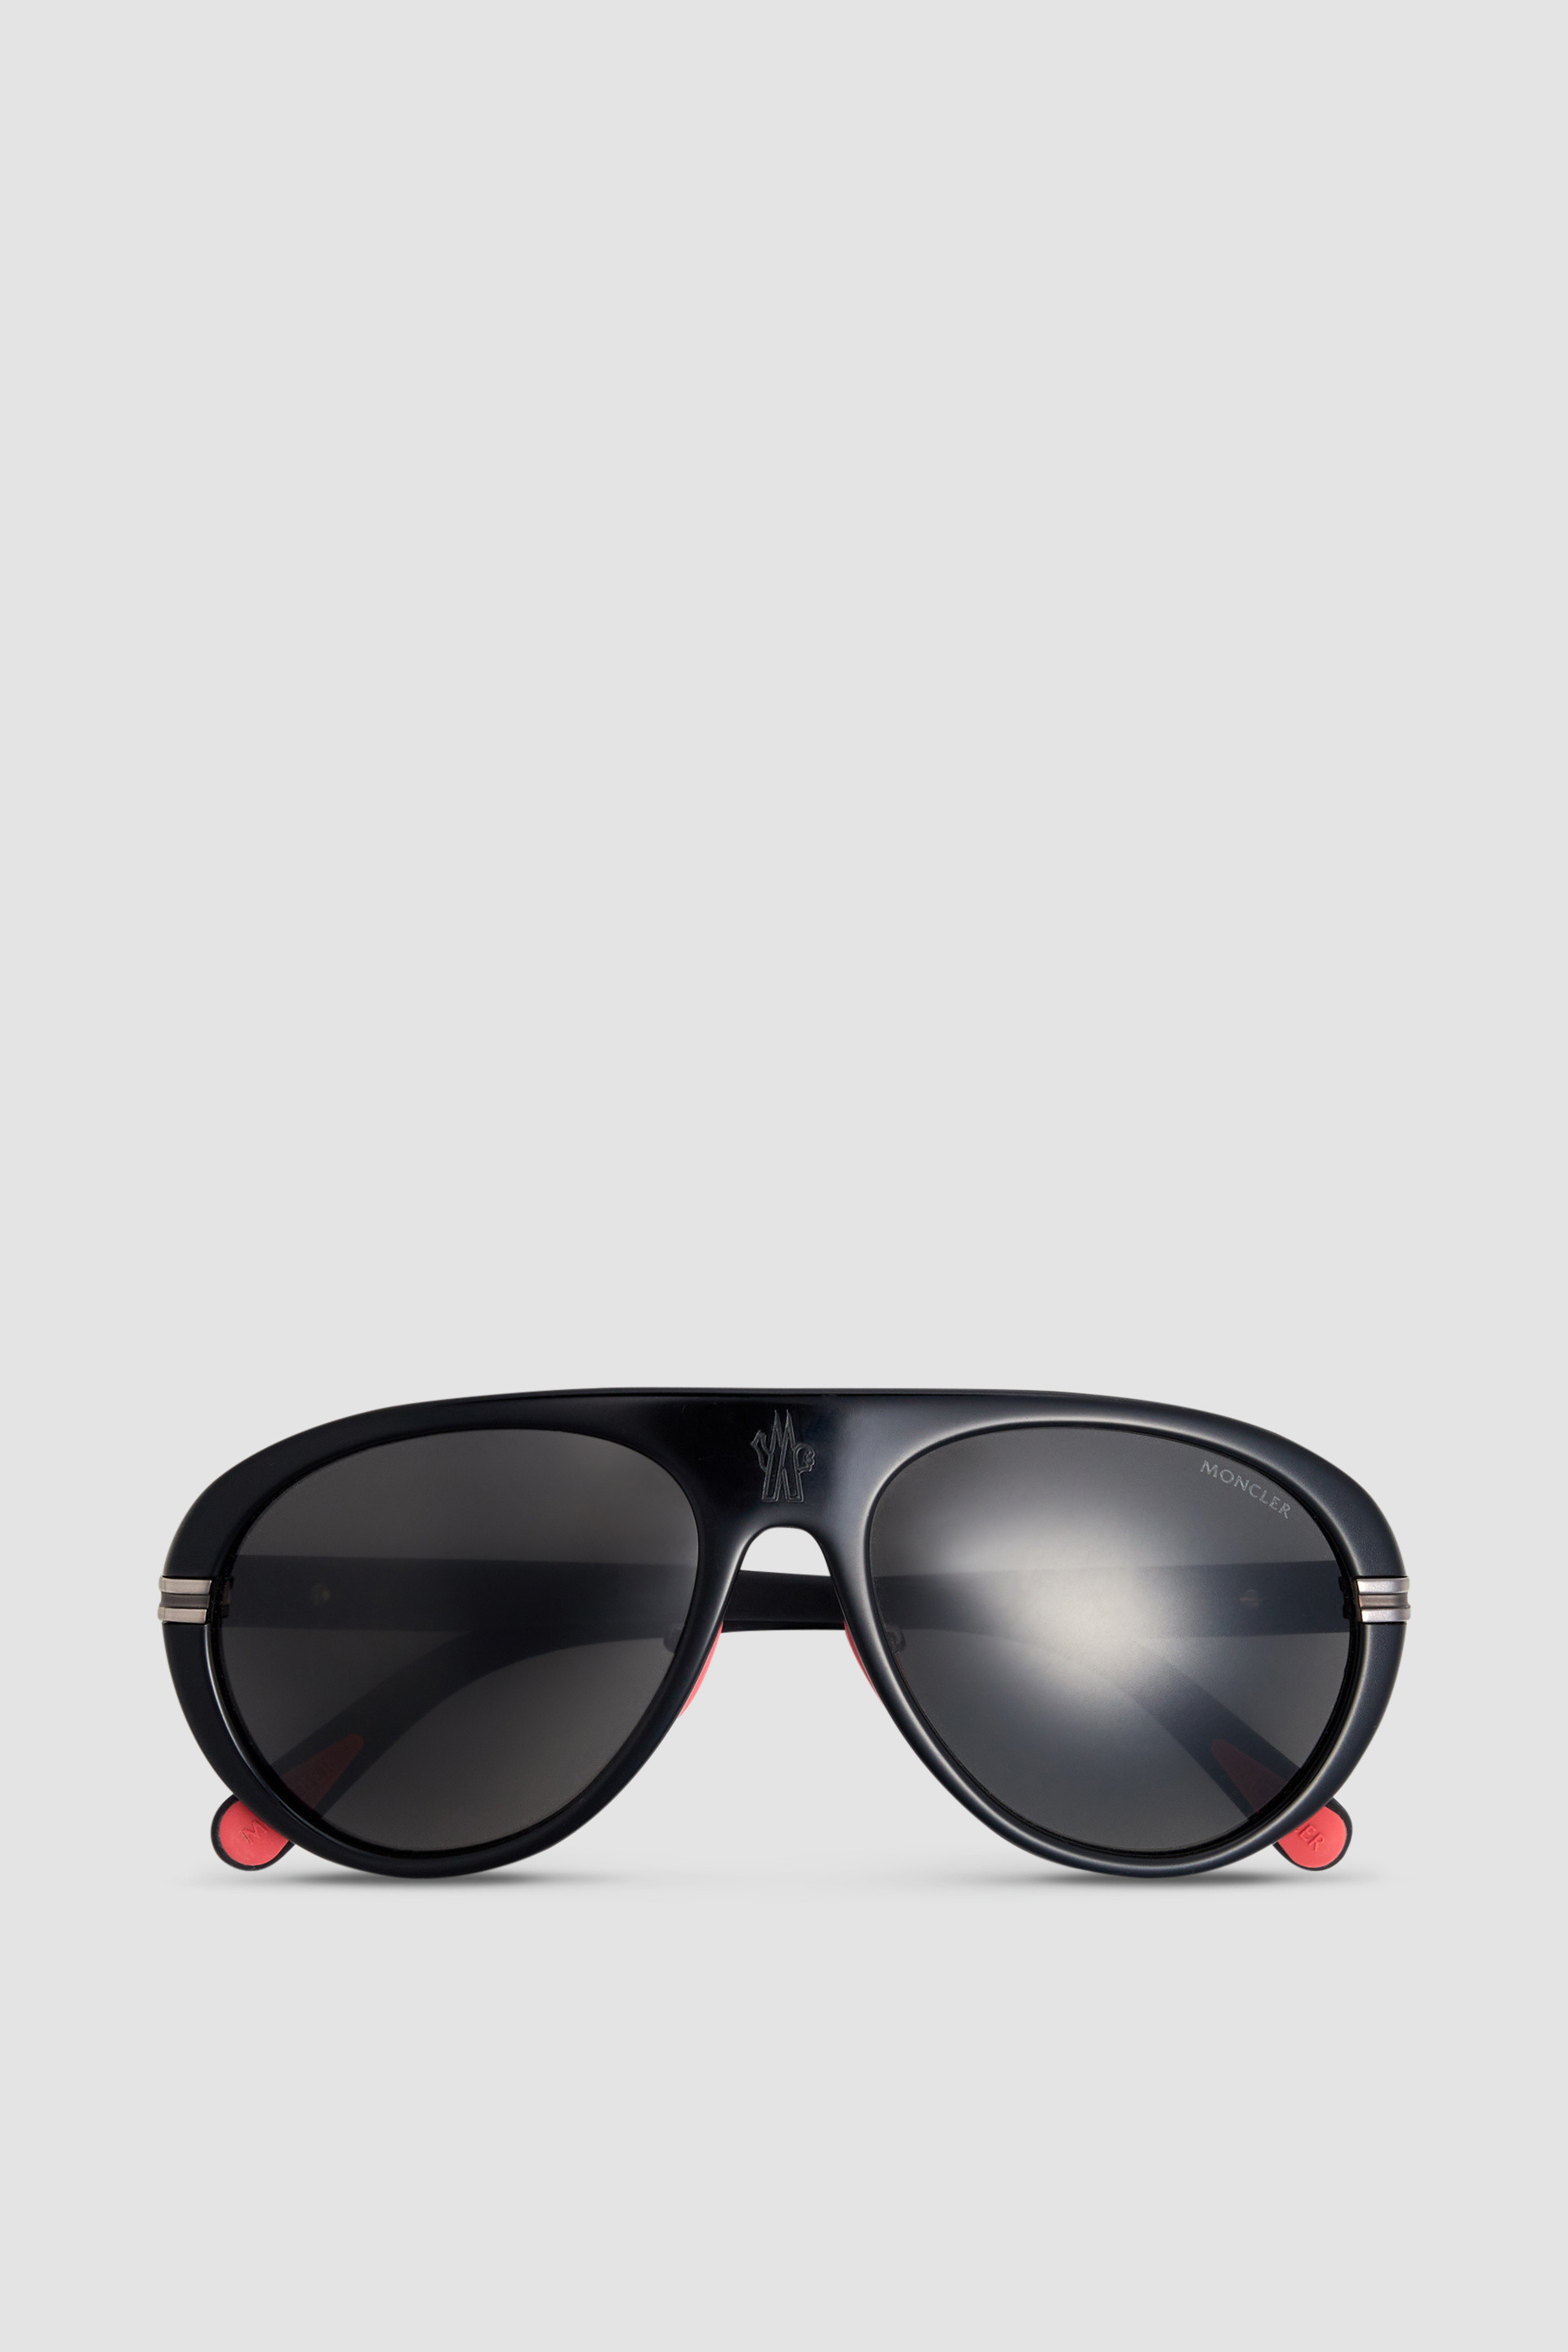 Black & Dark Gray Navigaze Pilot Sunglasses - Sunglasses for Men